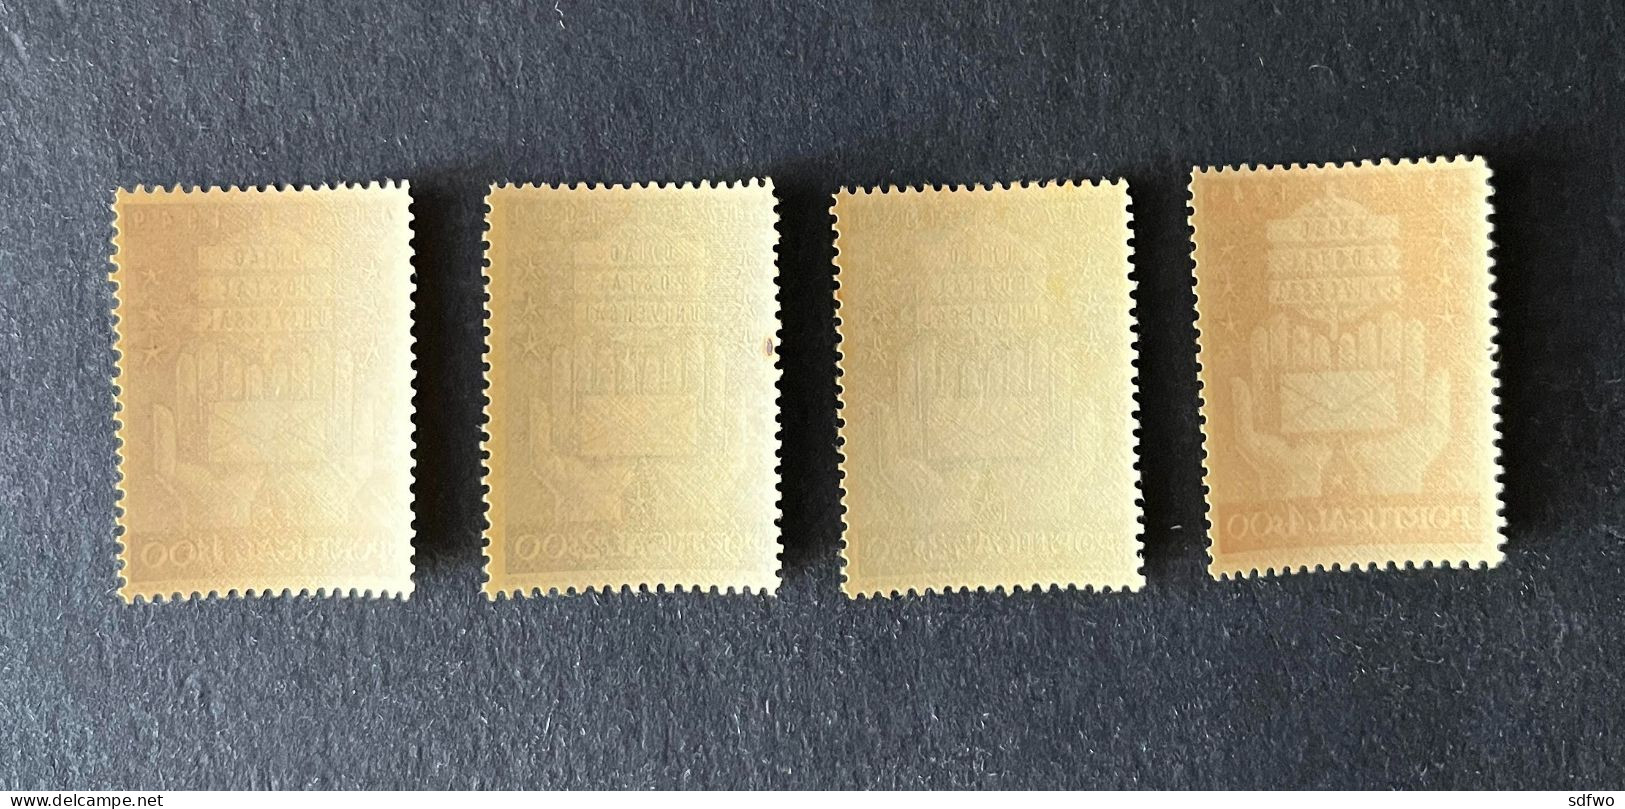 (T3) Portugal - 1949 UPU Complete Set - Af. 715 To 718 - MNH - Unused Stamps